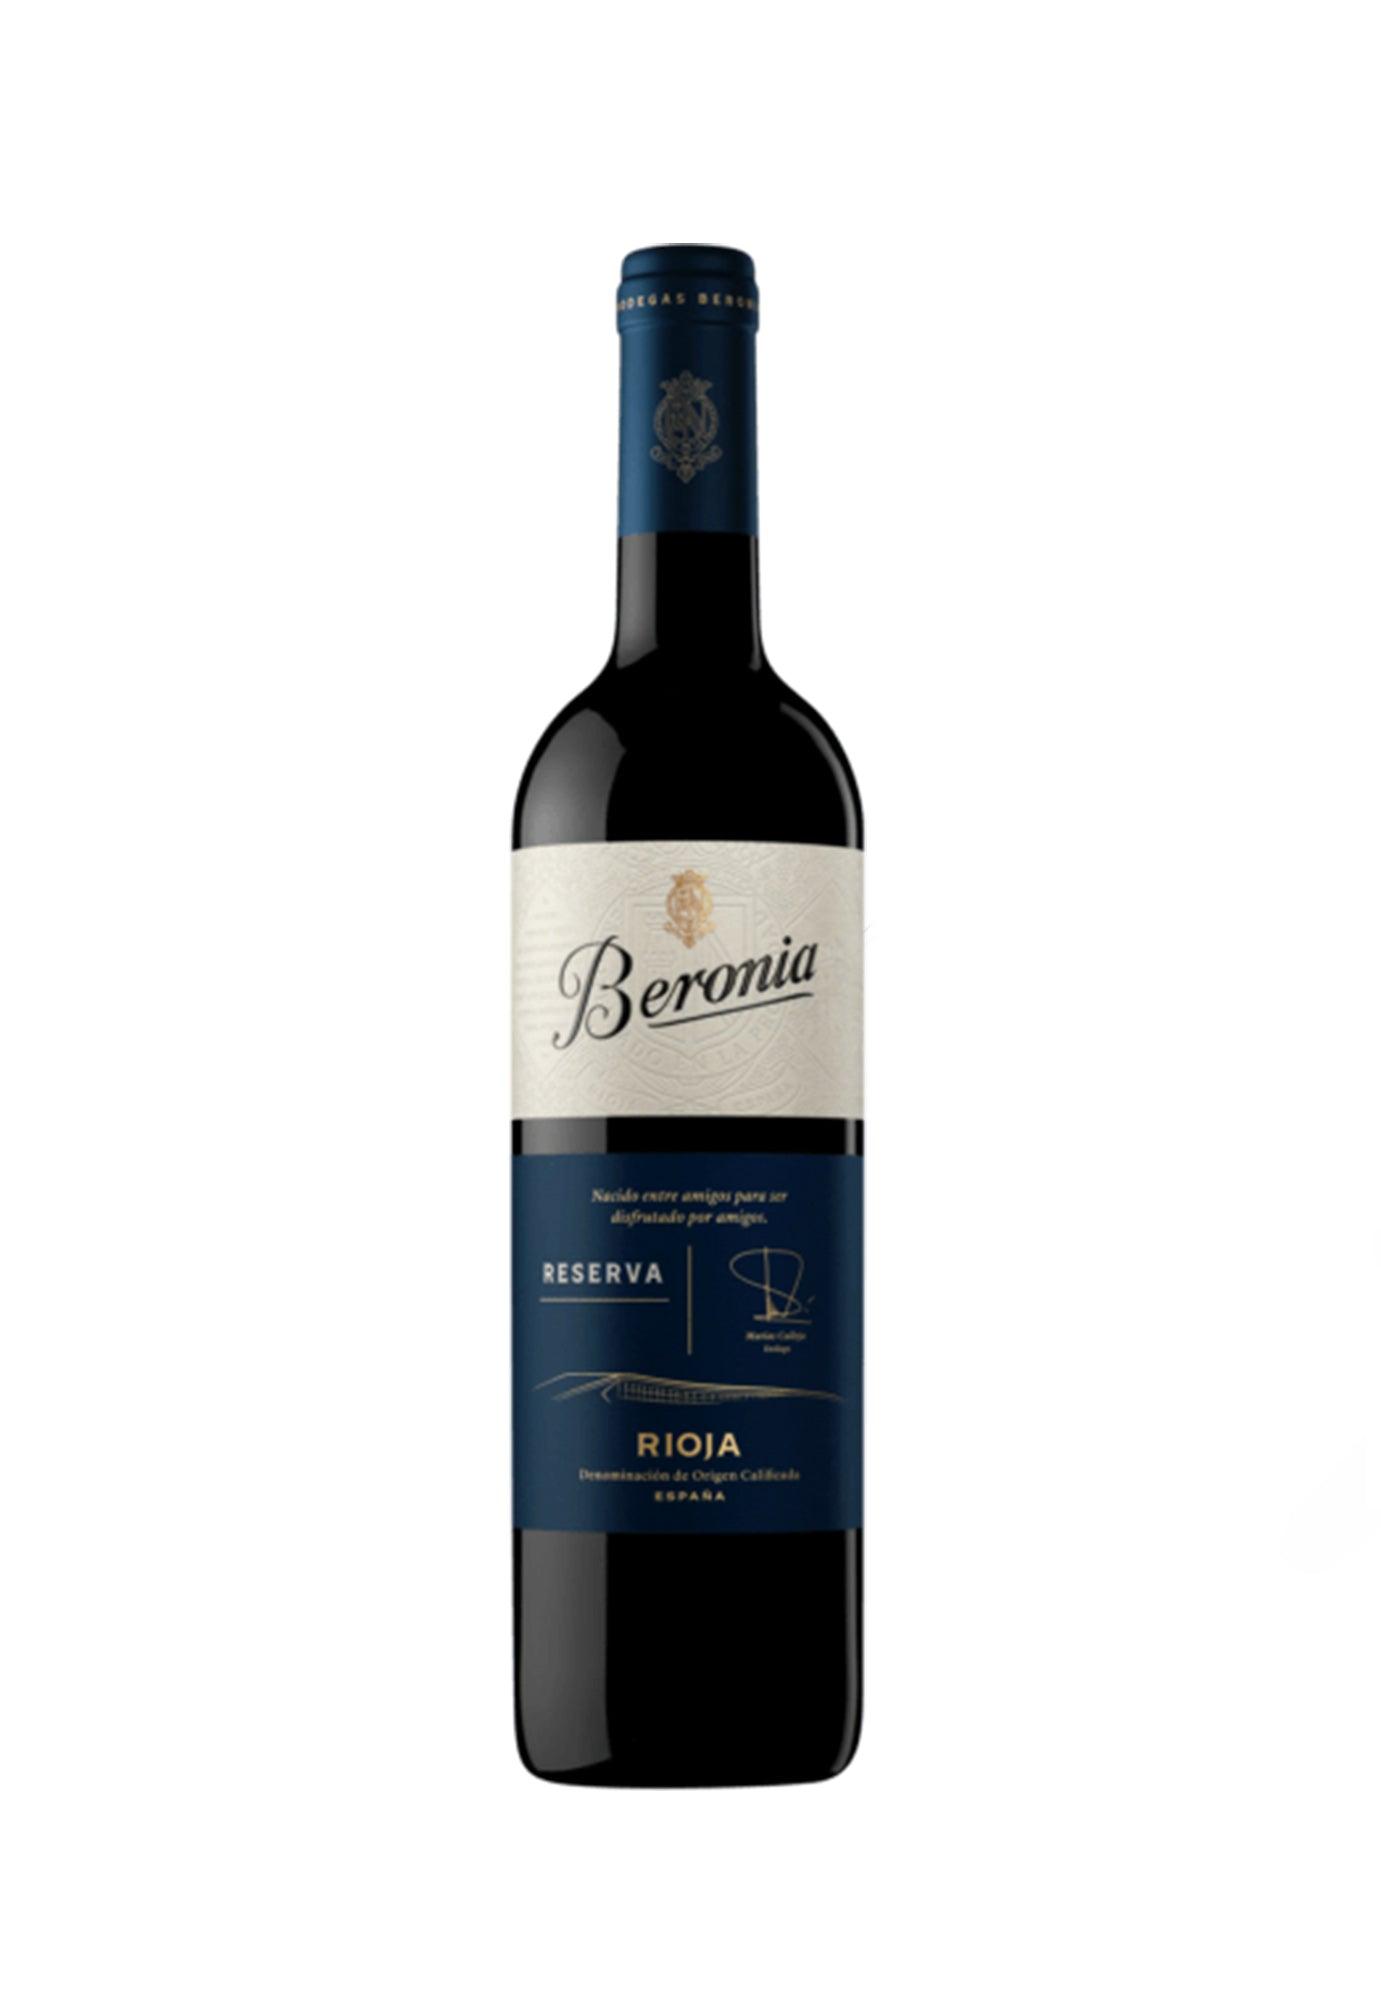 Beronia Rioja Reserva 2018